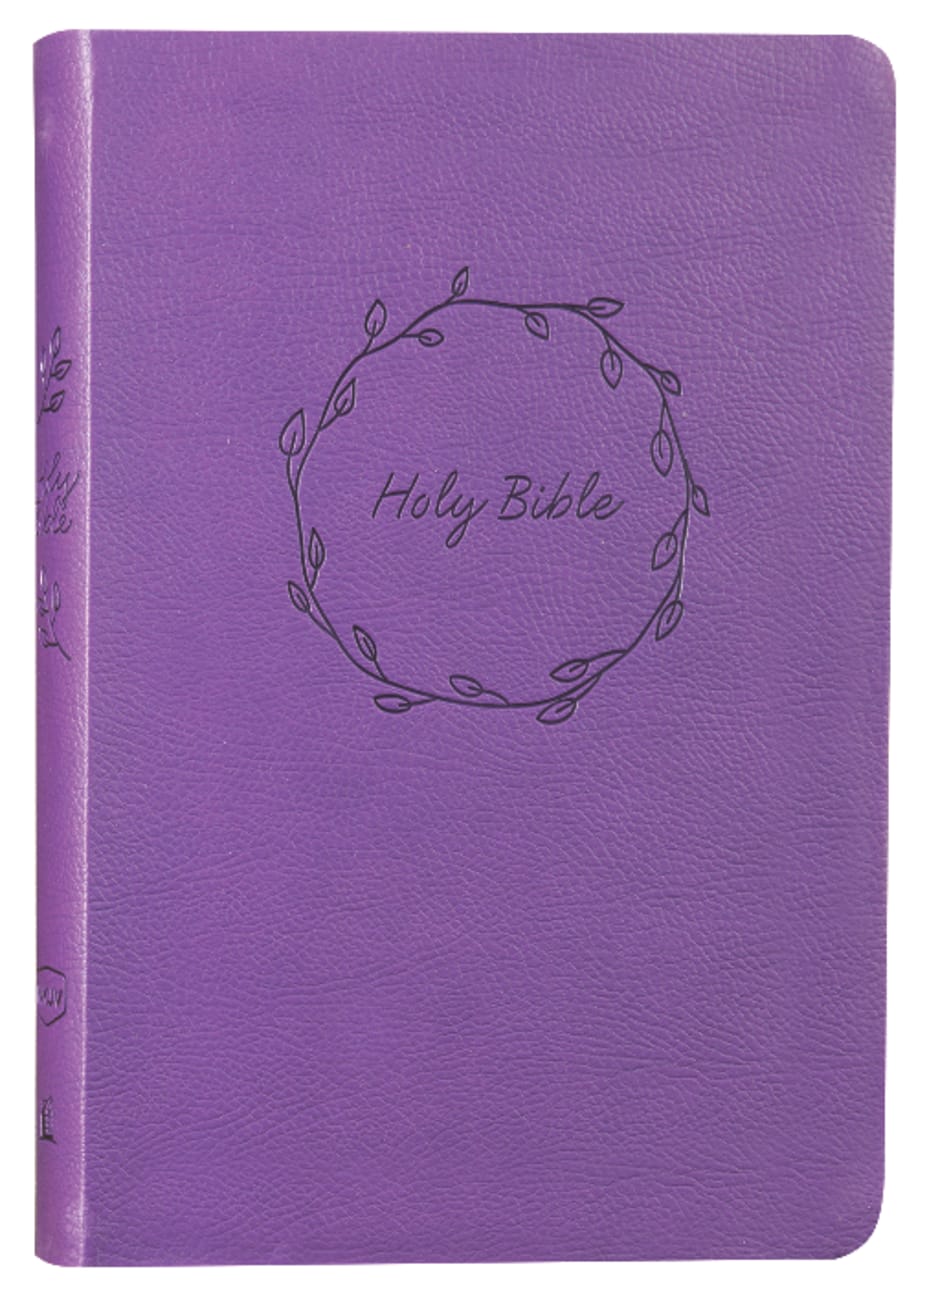 NKJV Value Thinline Bible Large Print Purple (Red Letter Edition) Premium Imitation Leather